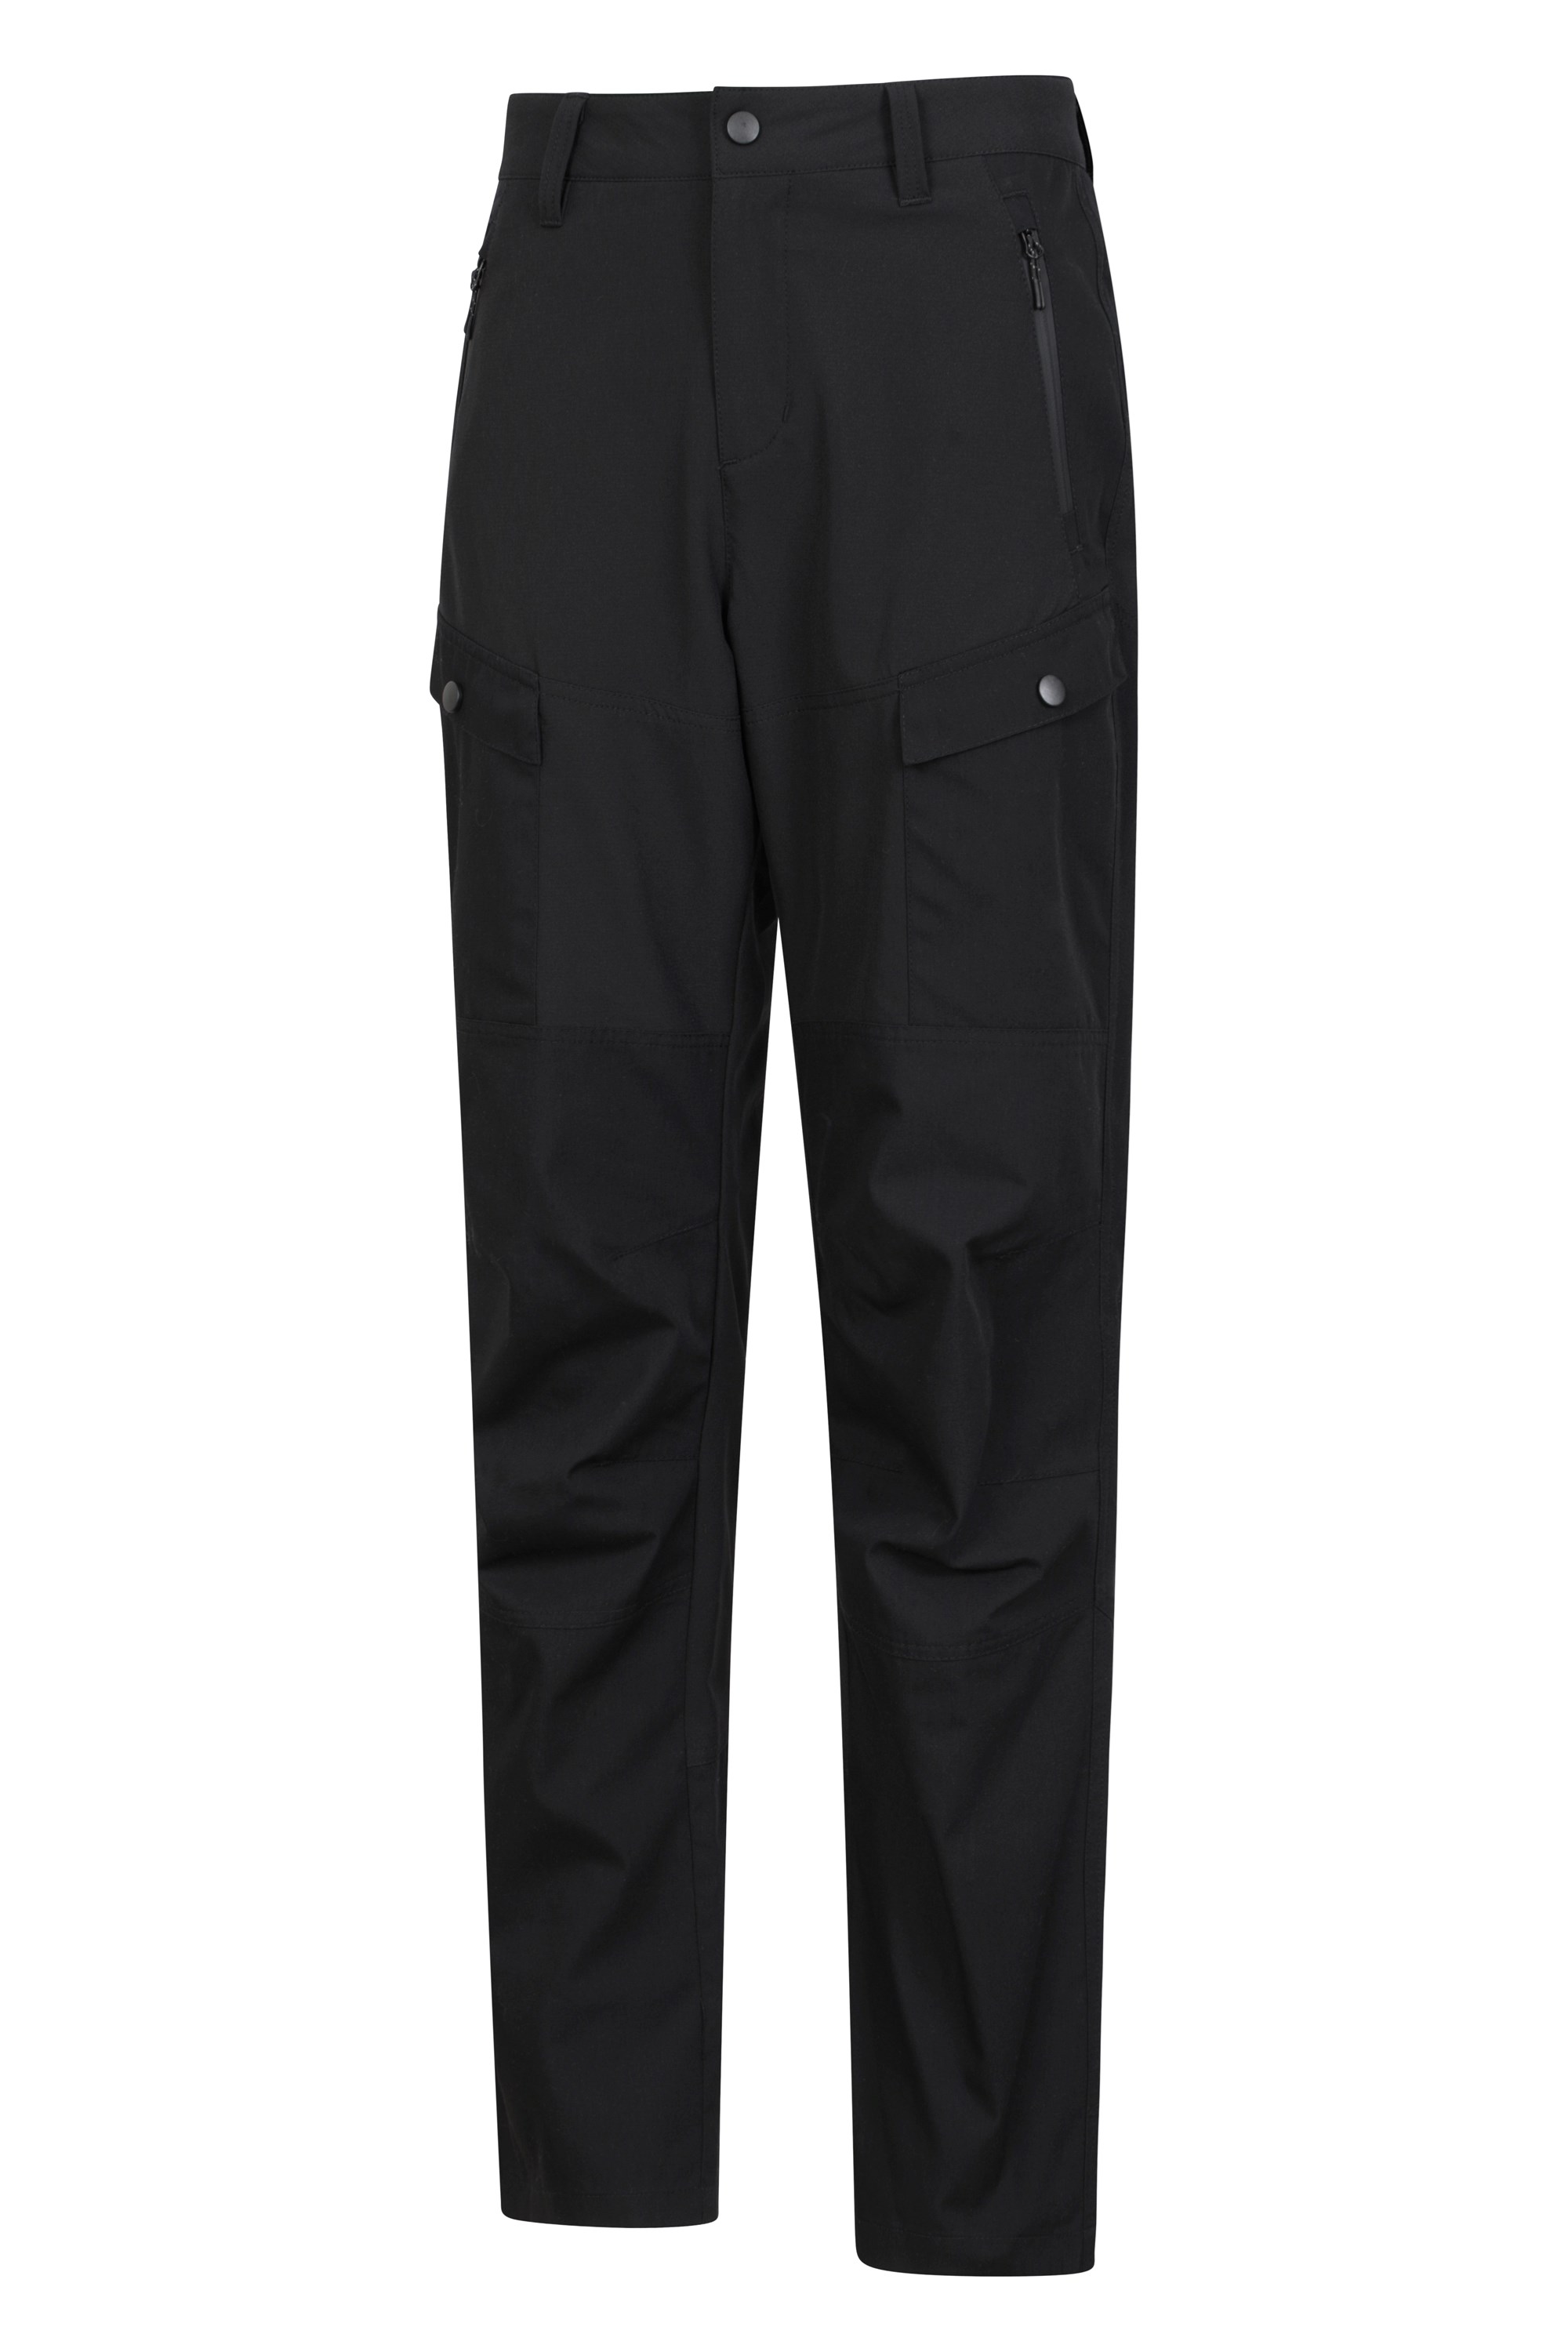 On DWR Explorer Hybrid Pants - Black, Active Pants & Joggers